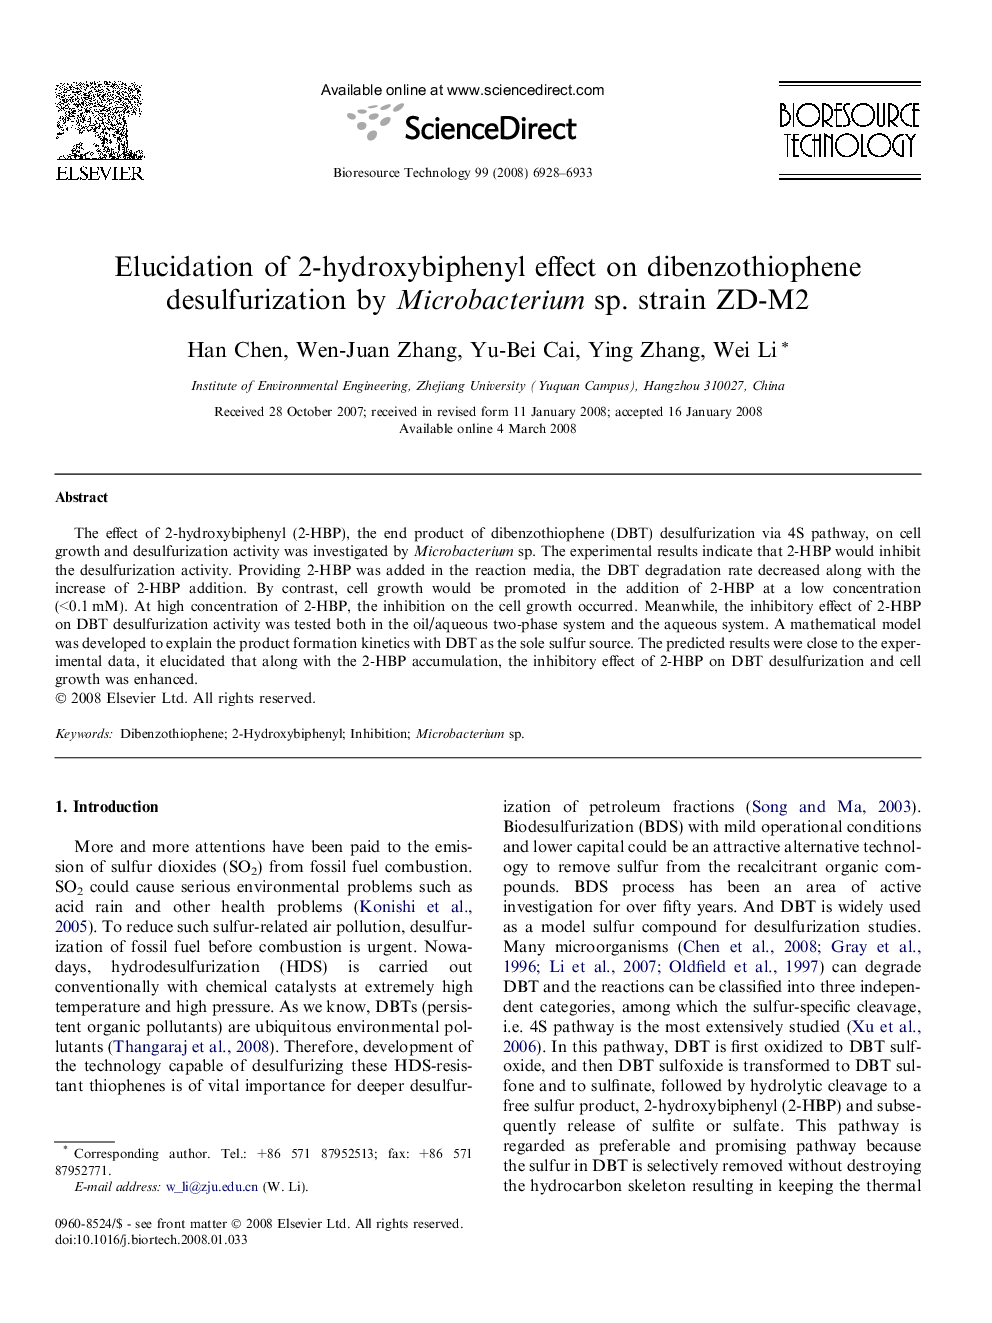 Elucidation of 2-hydroxybiphenyl effect on dibenzothiophene desulfurization by Microbacterium sp. strain ZD-M2